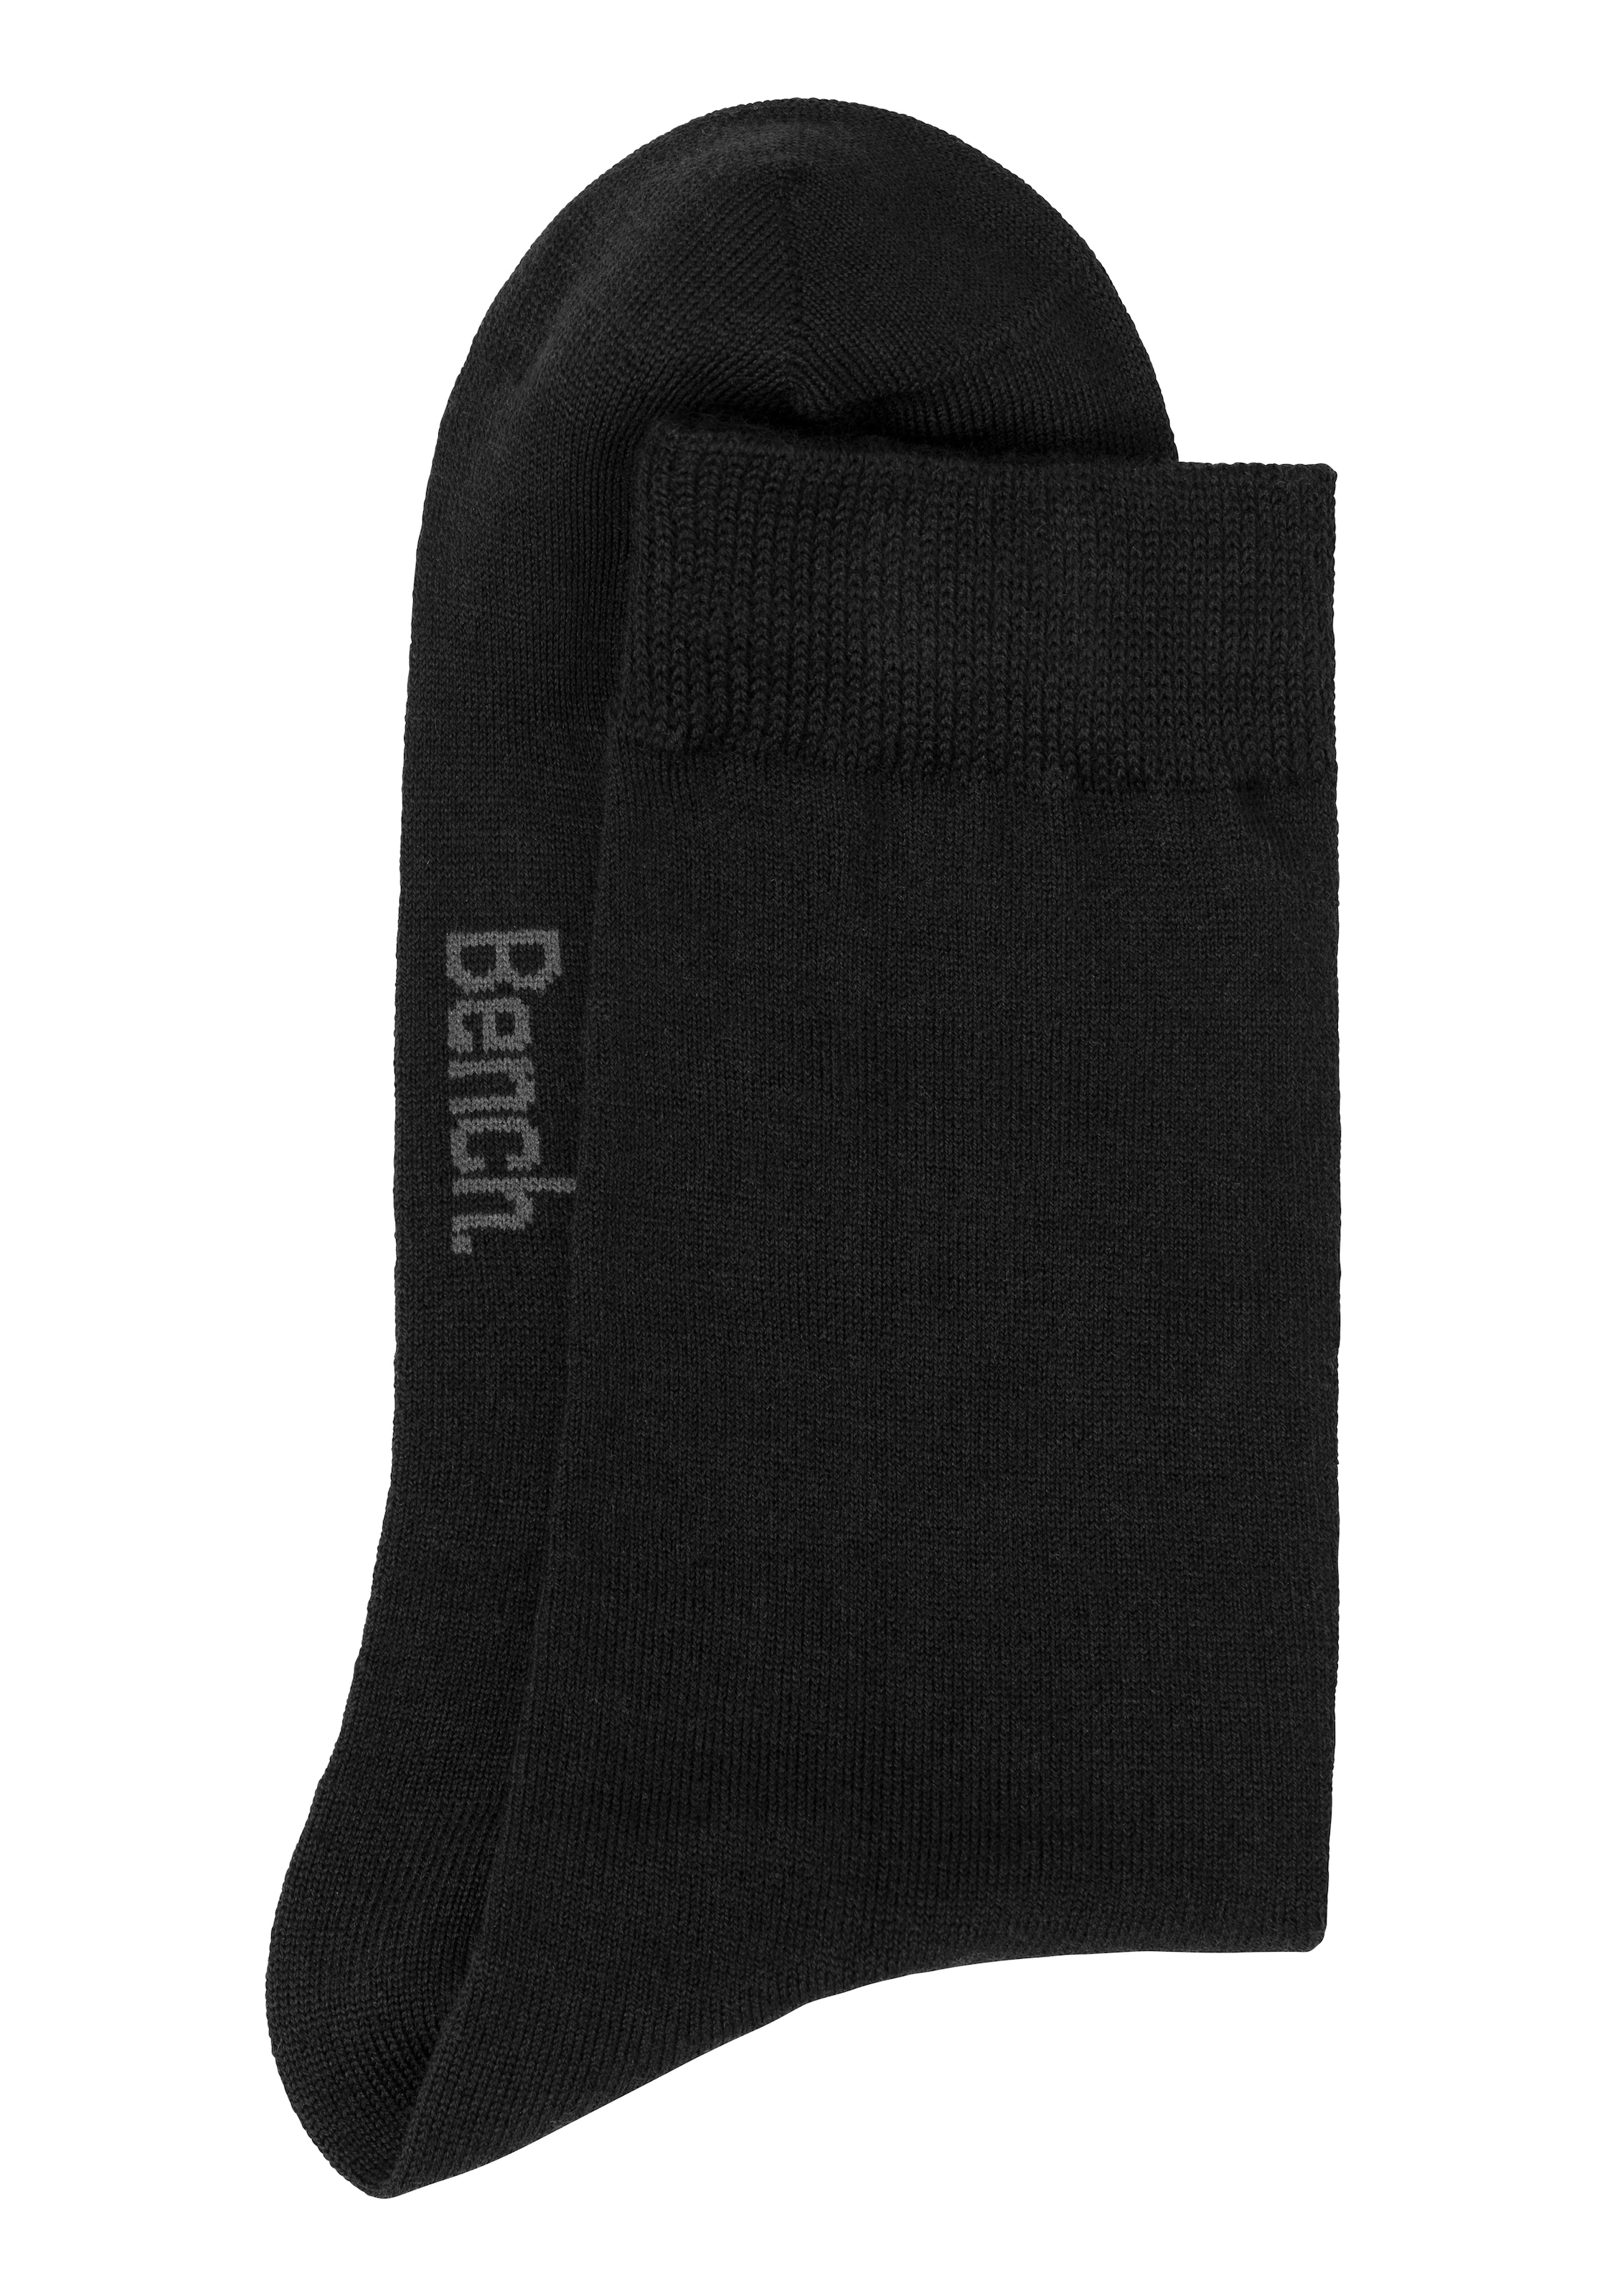 Bench. Socken, BAUR (3 aus online Wollsocken Material Paar), kaufen | flauschigem